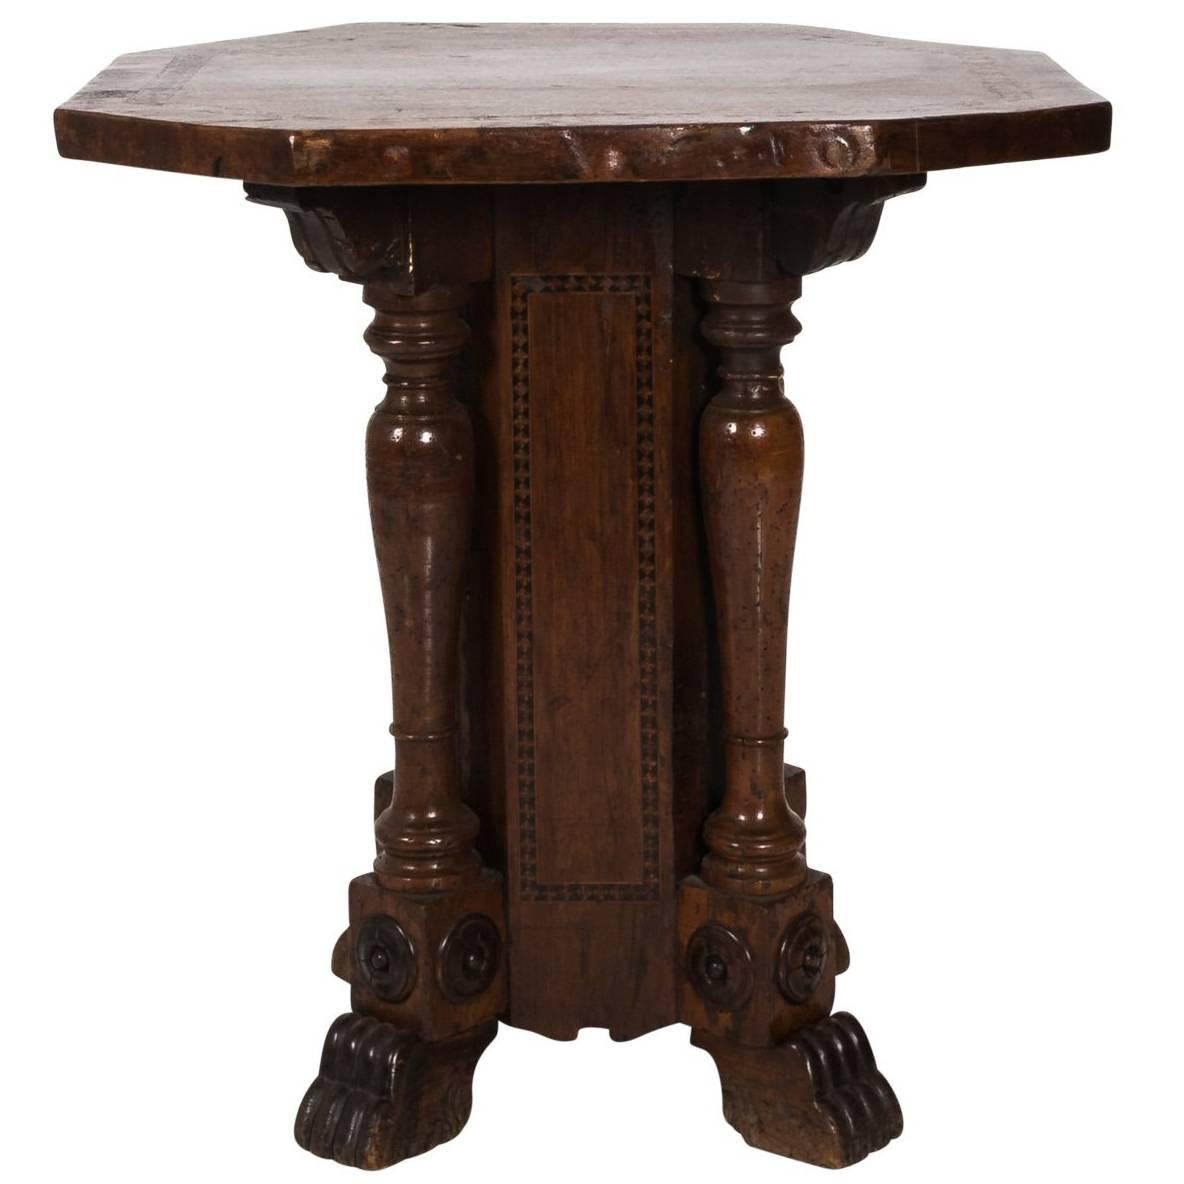 Late 18th Century Italian Pedestal Table